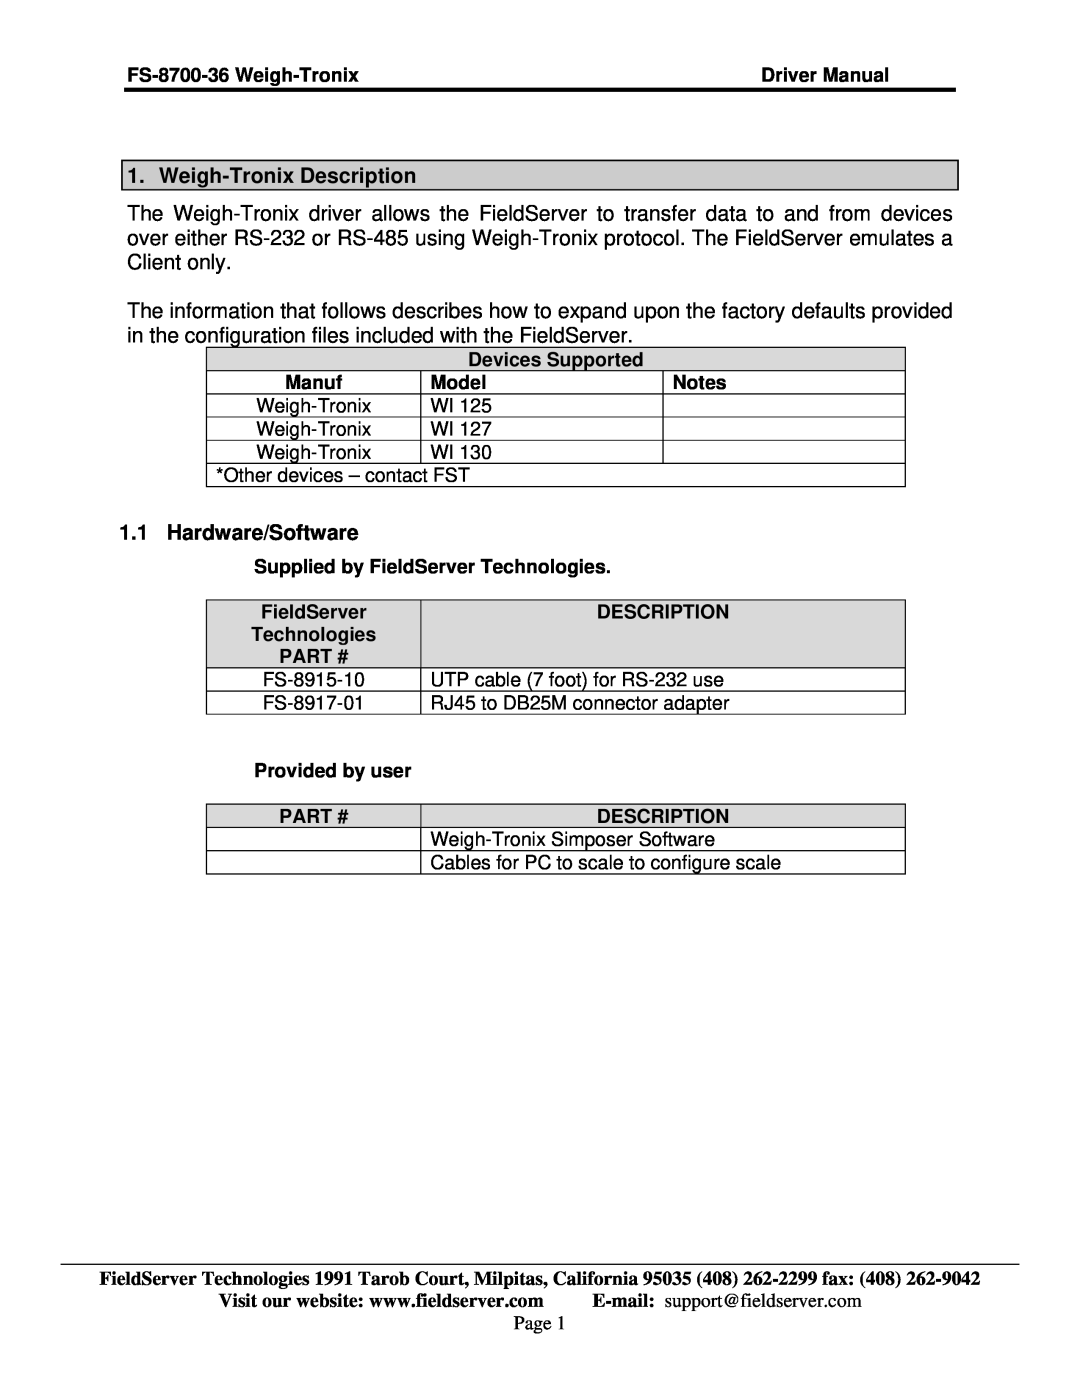 FieldServer FS-8700-36 instruction manual Weigh-Tronix Description, Hardware/Software, Page 